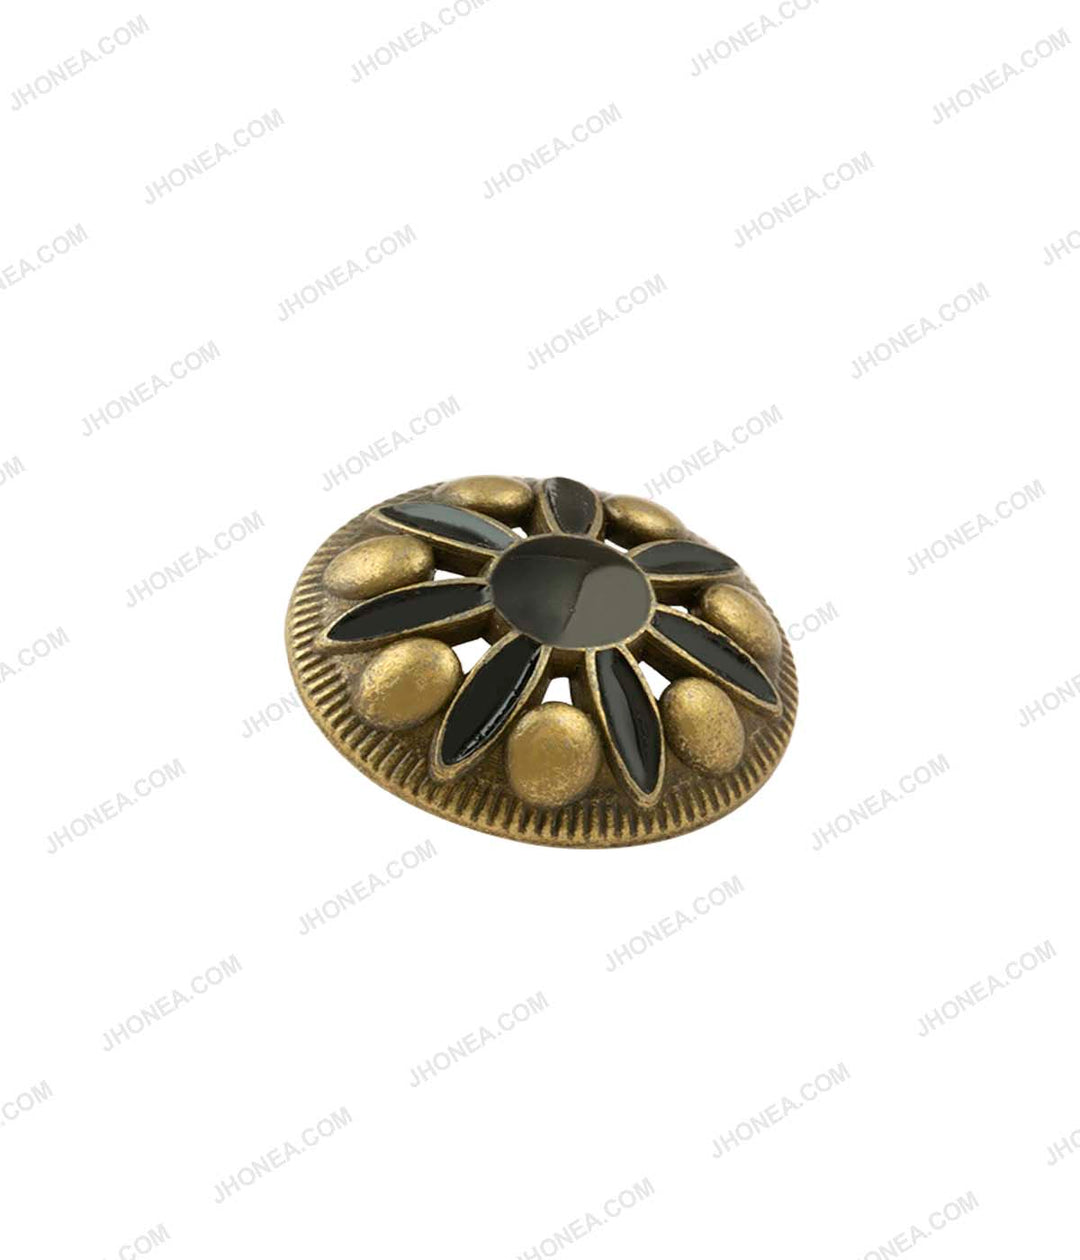 Antique Brass with Black Enamel Flower Petal Design Metal Buttons